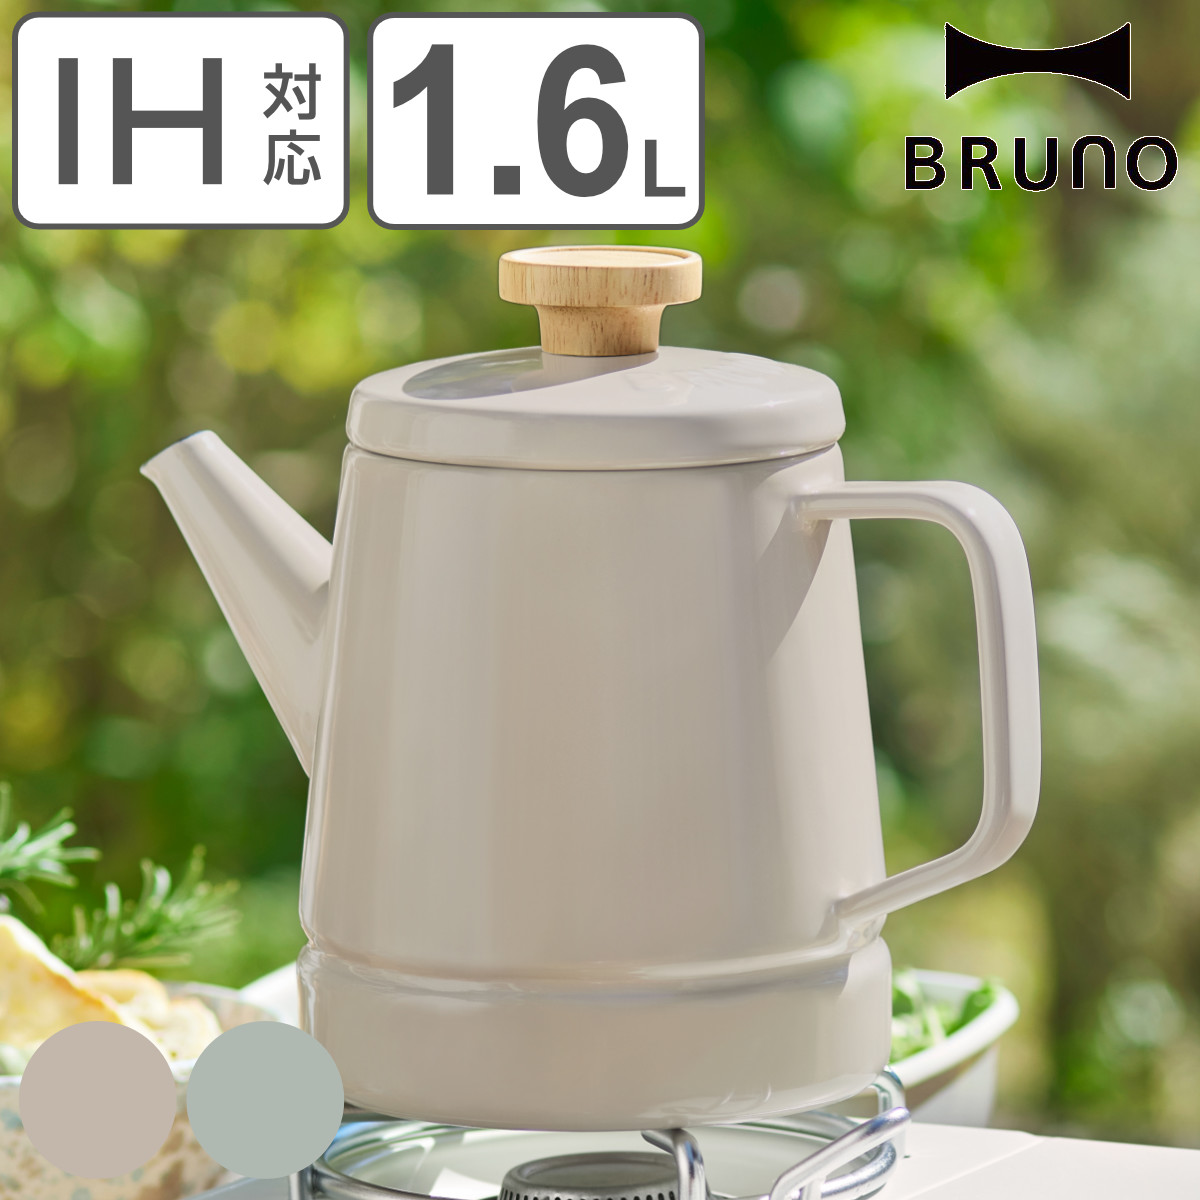 dショッピング |BRUNO ホーローケトル 1.6L IH対応 富士ホーロー